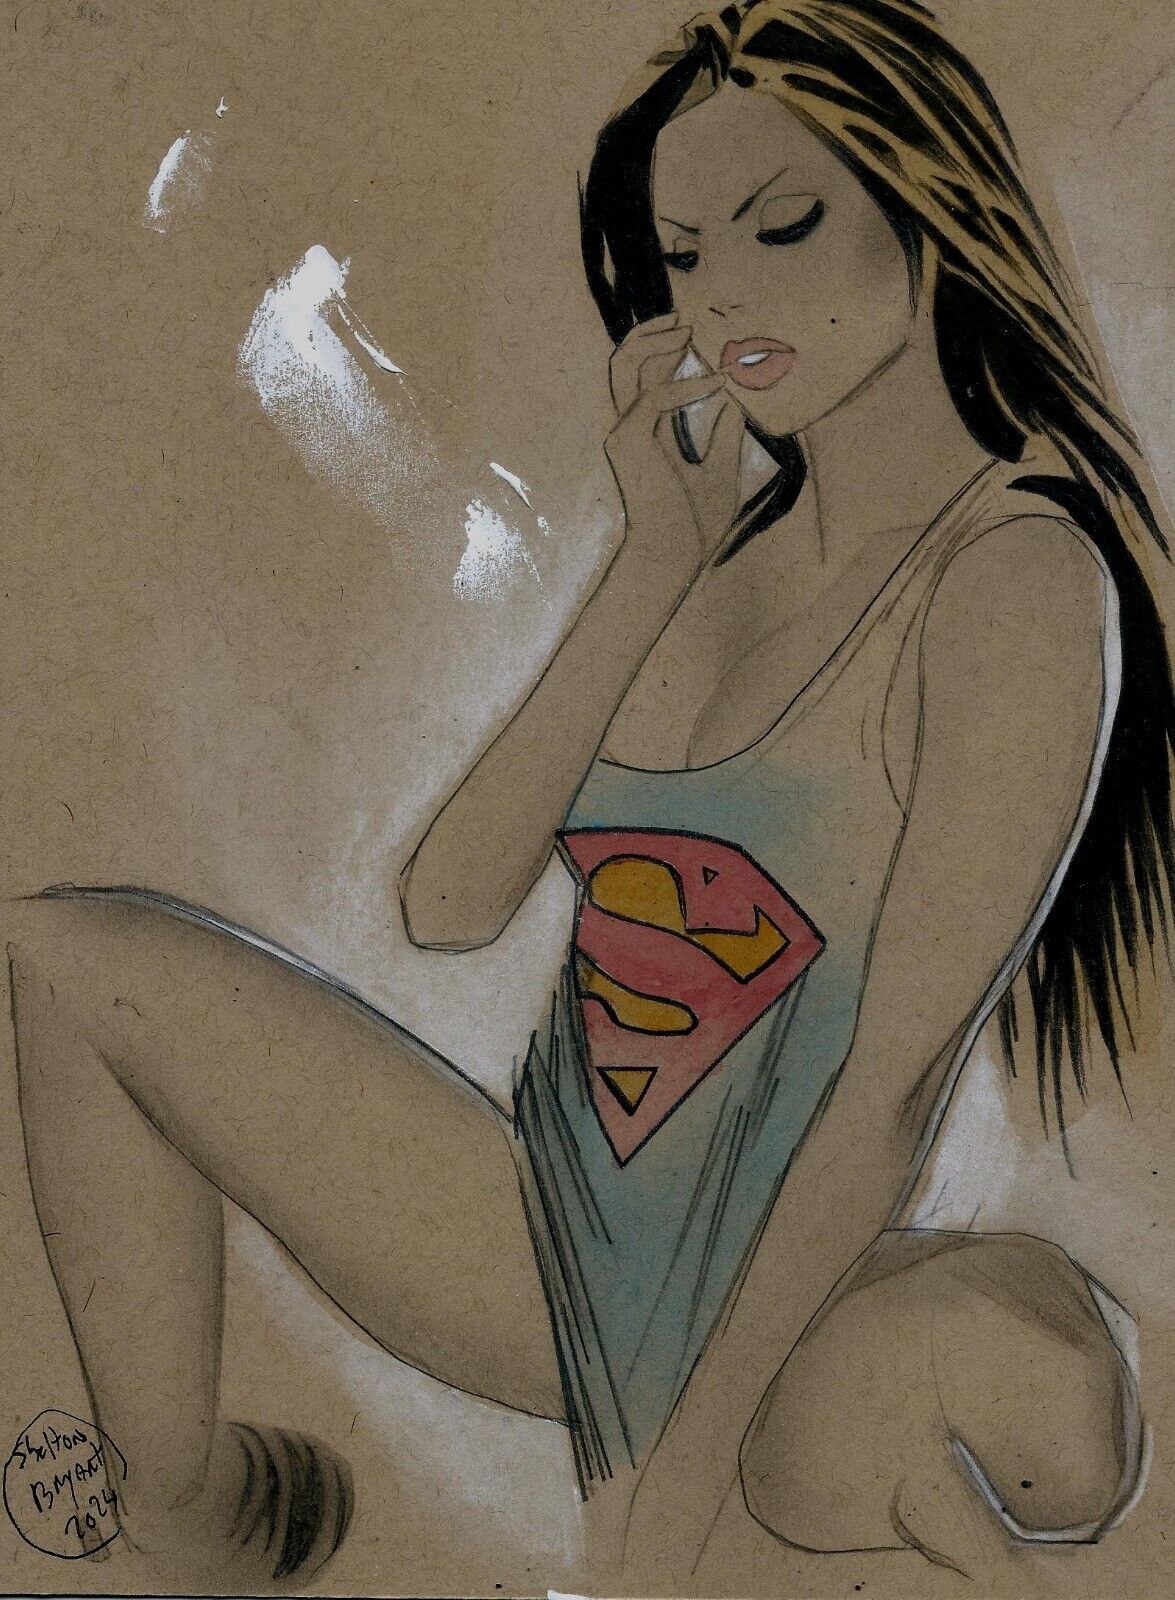 Supergirl: Original Art by Shelton Bryant